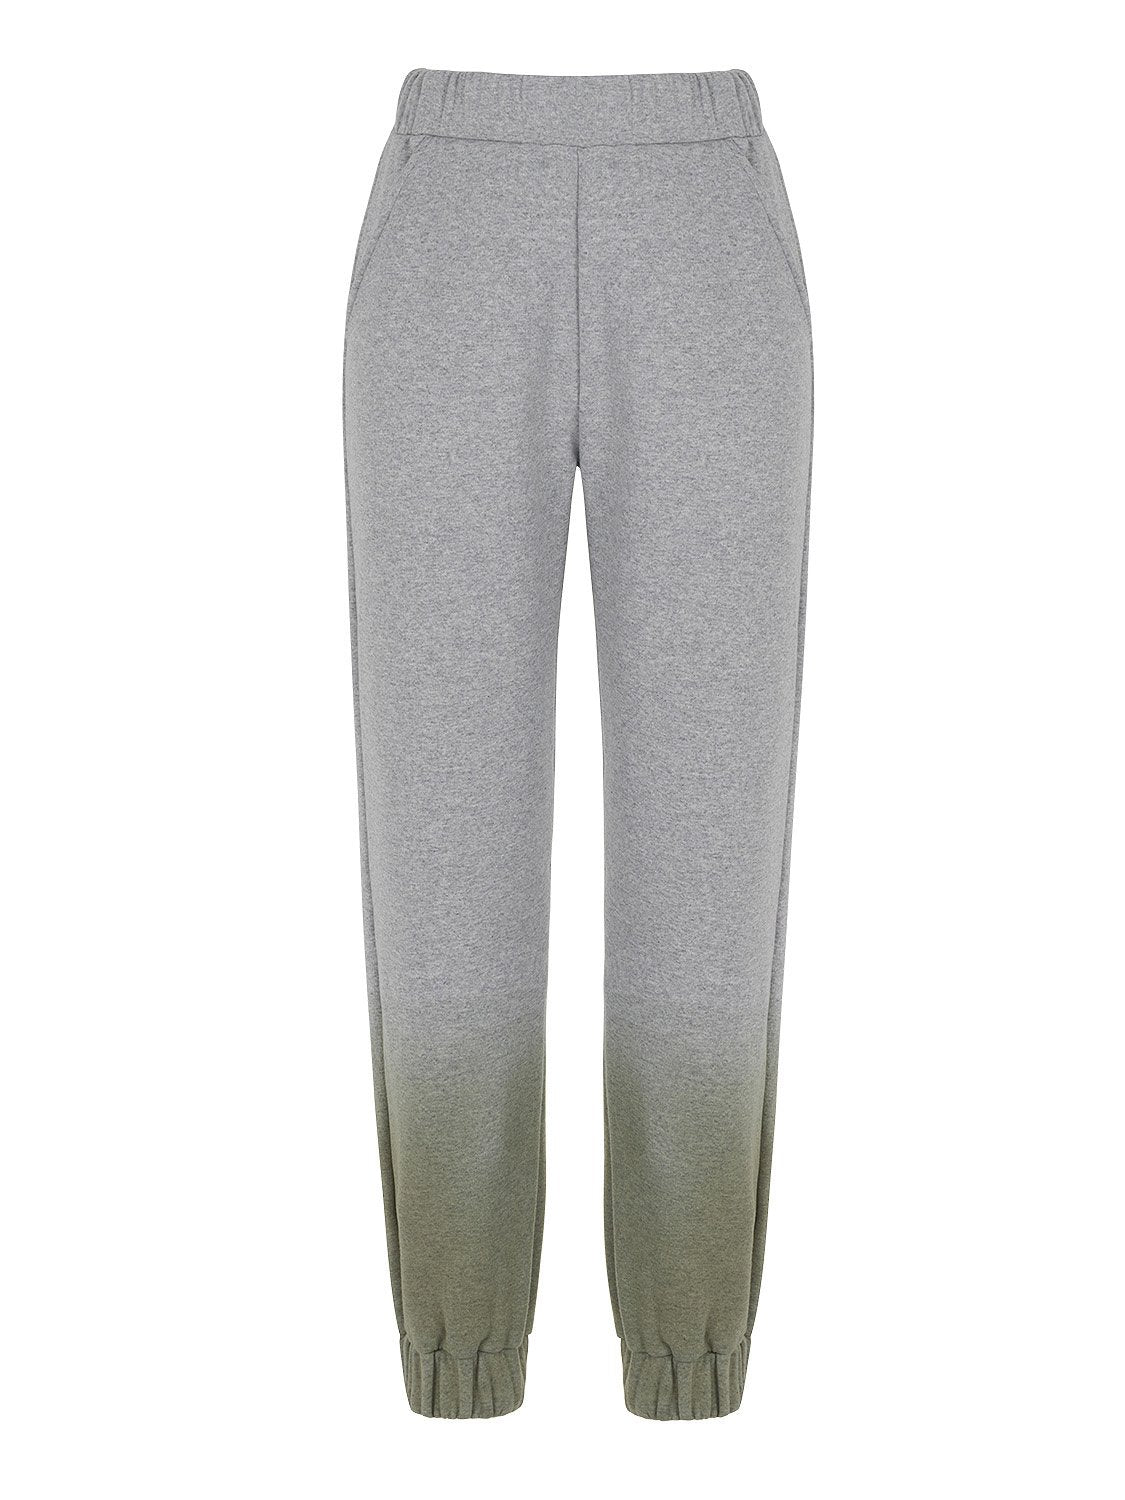 Shop Nocturne Women's Grey Gray Faded Jogging Pants